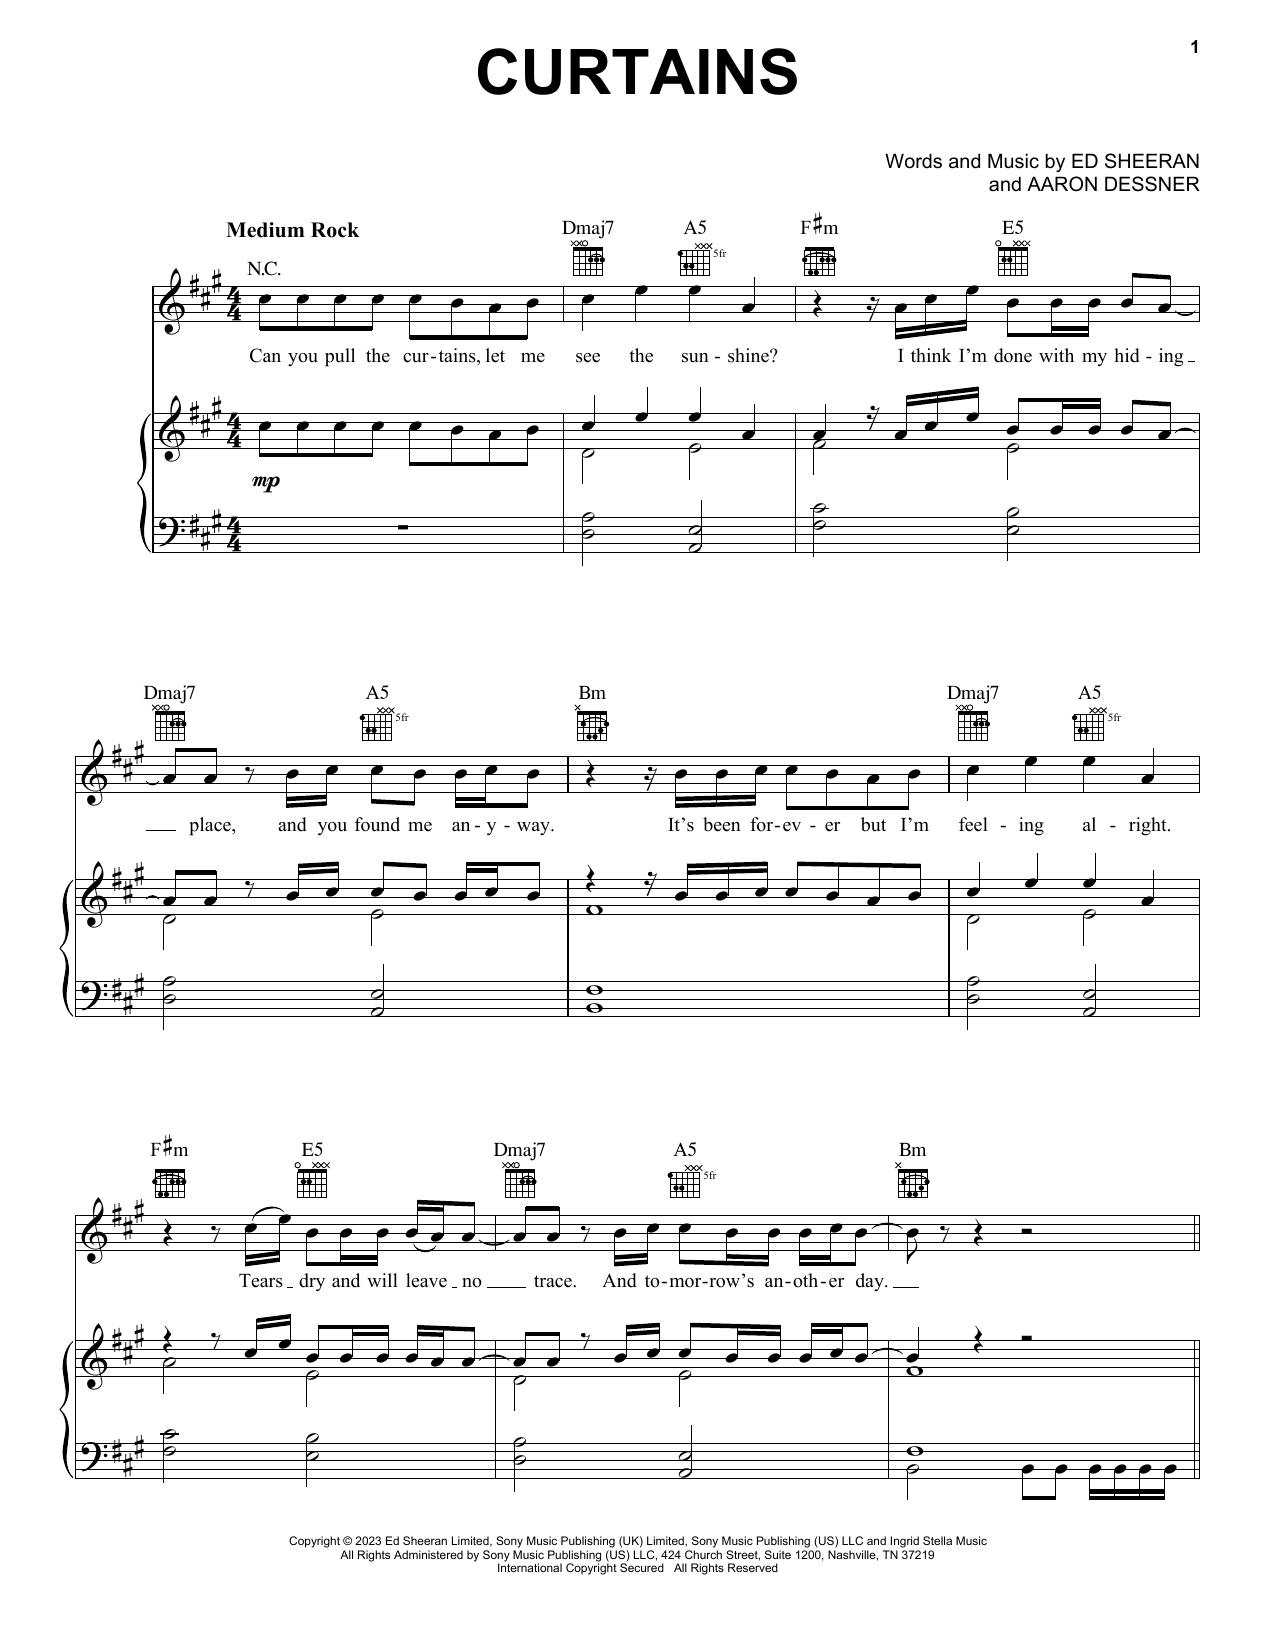 Ed Sheeran Curtains sheet music notes and chords. Download Printable PDF.